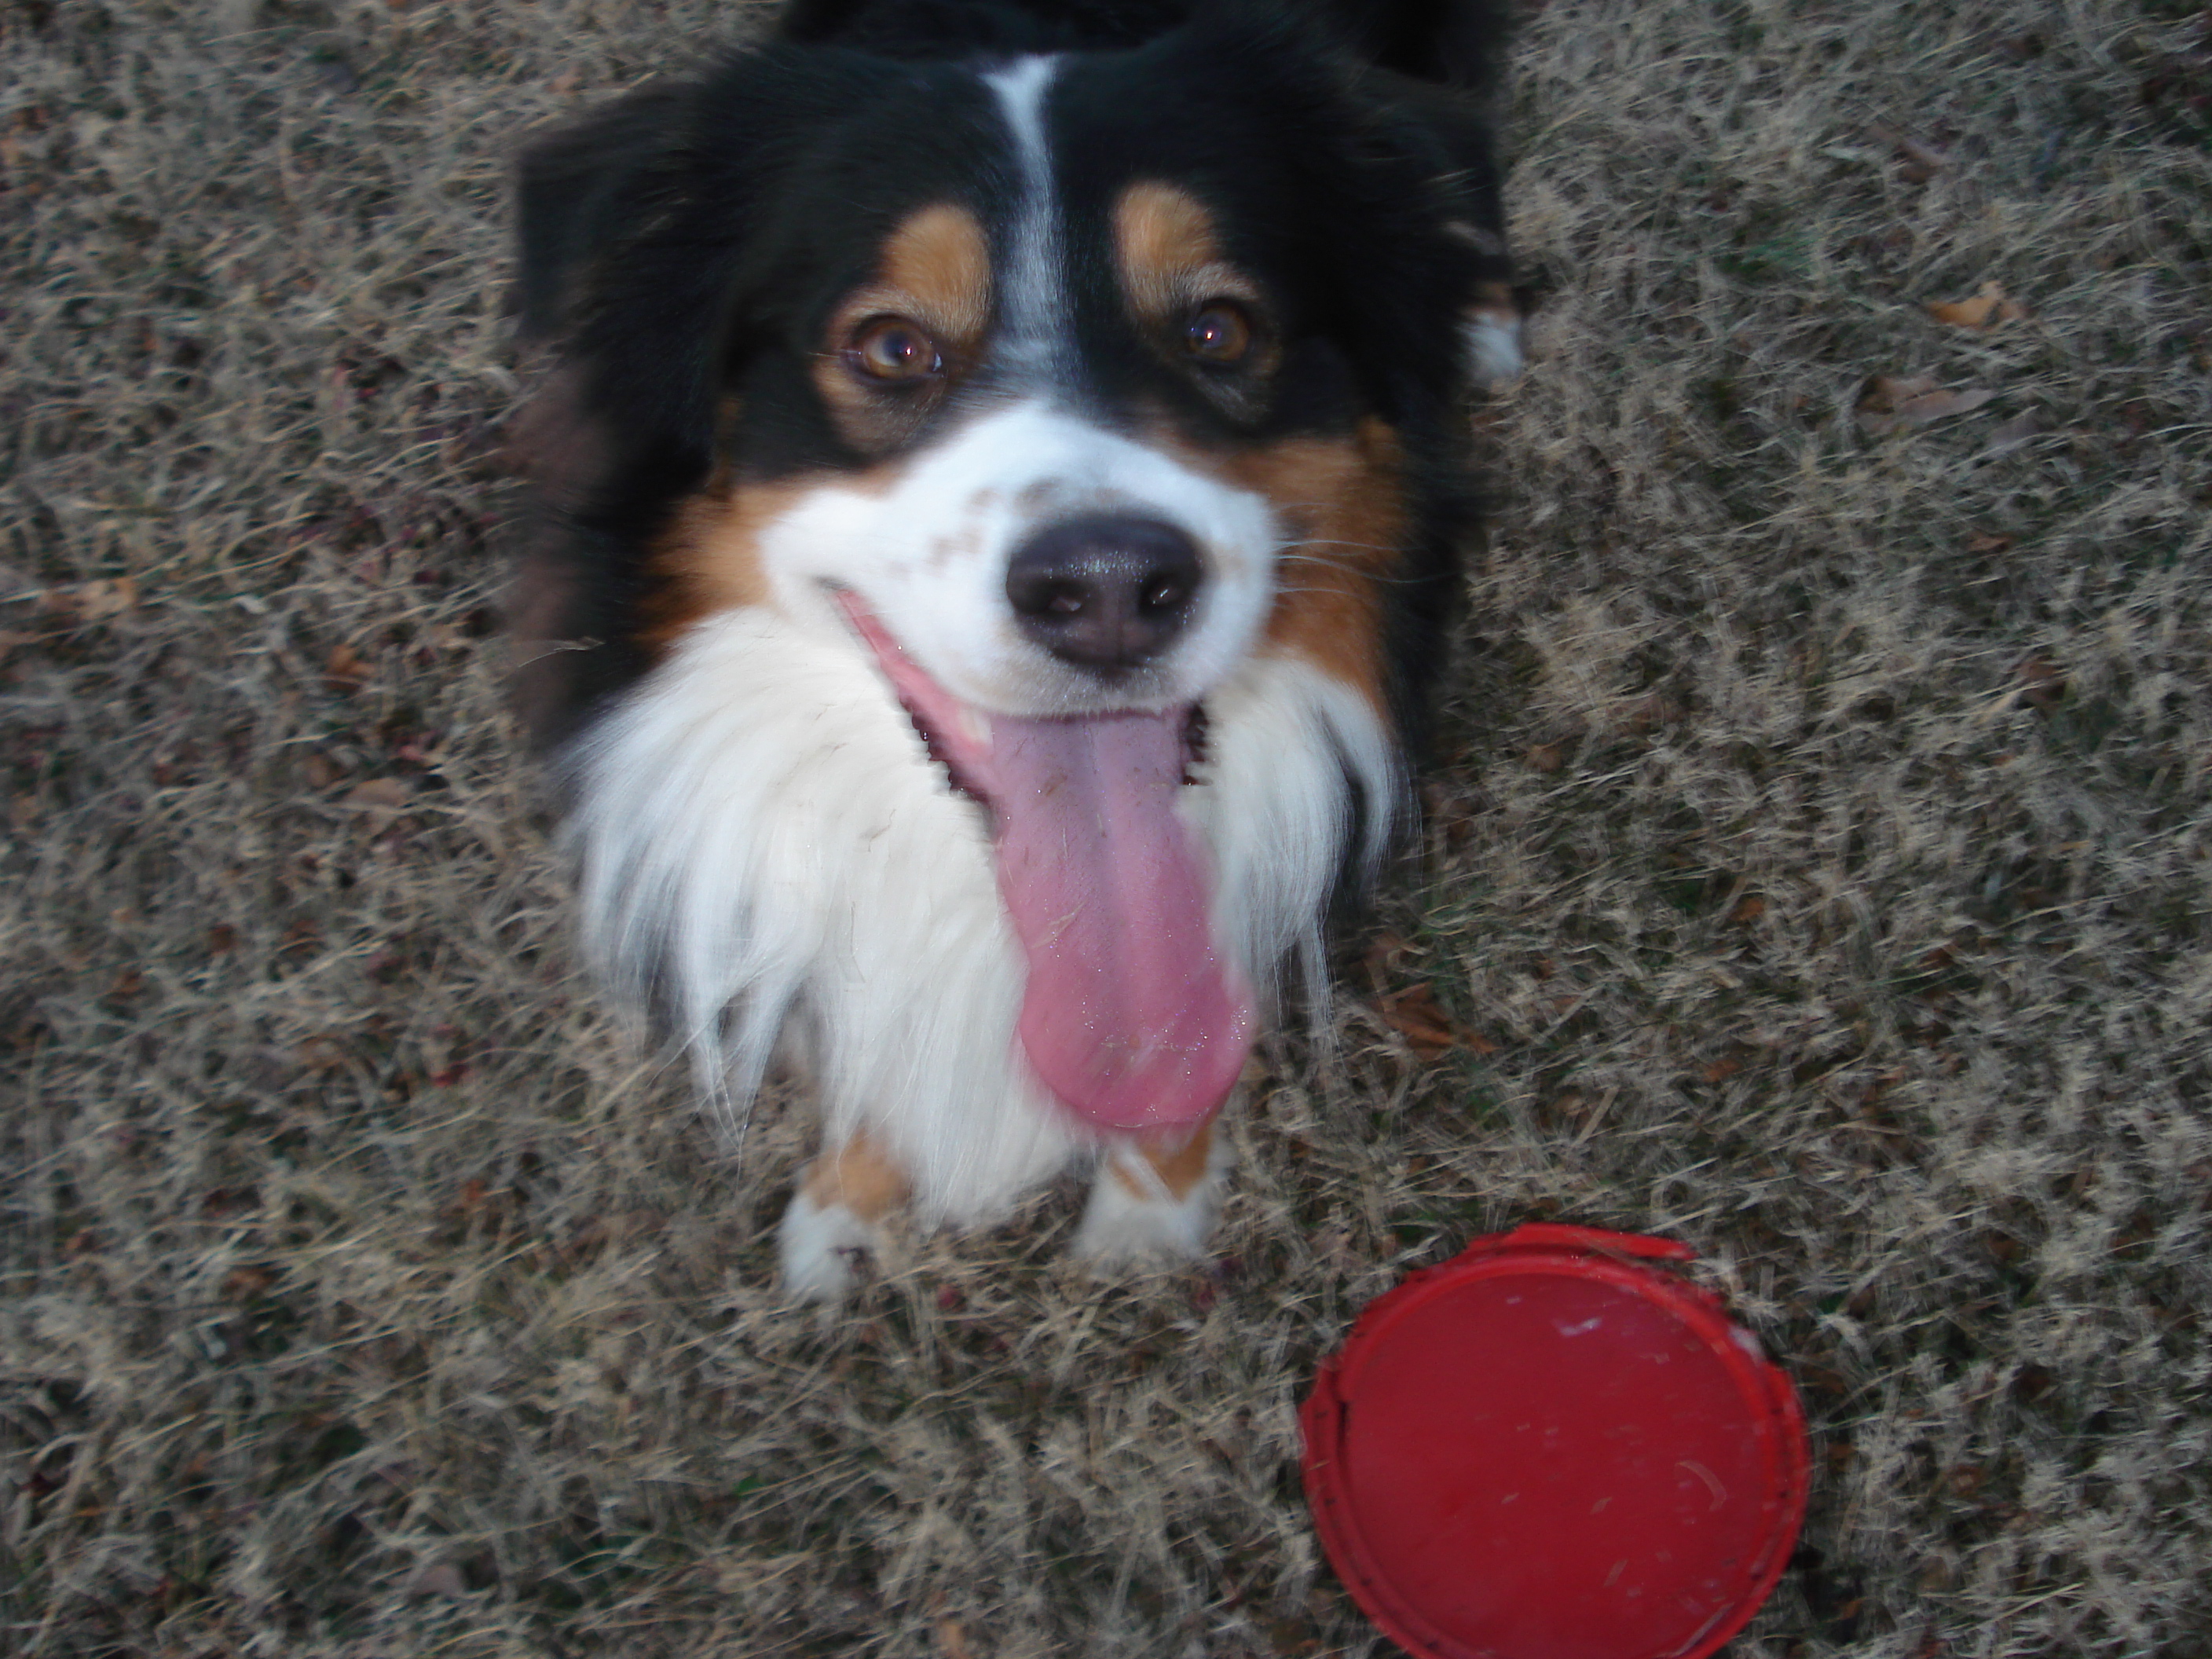 Merlin - One crazy frisbee dog